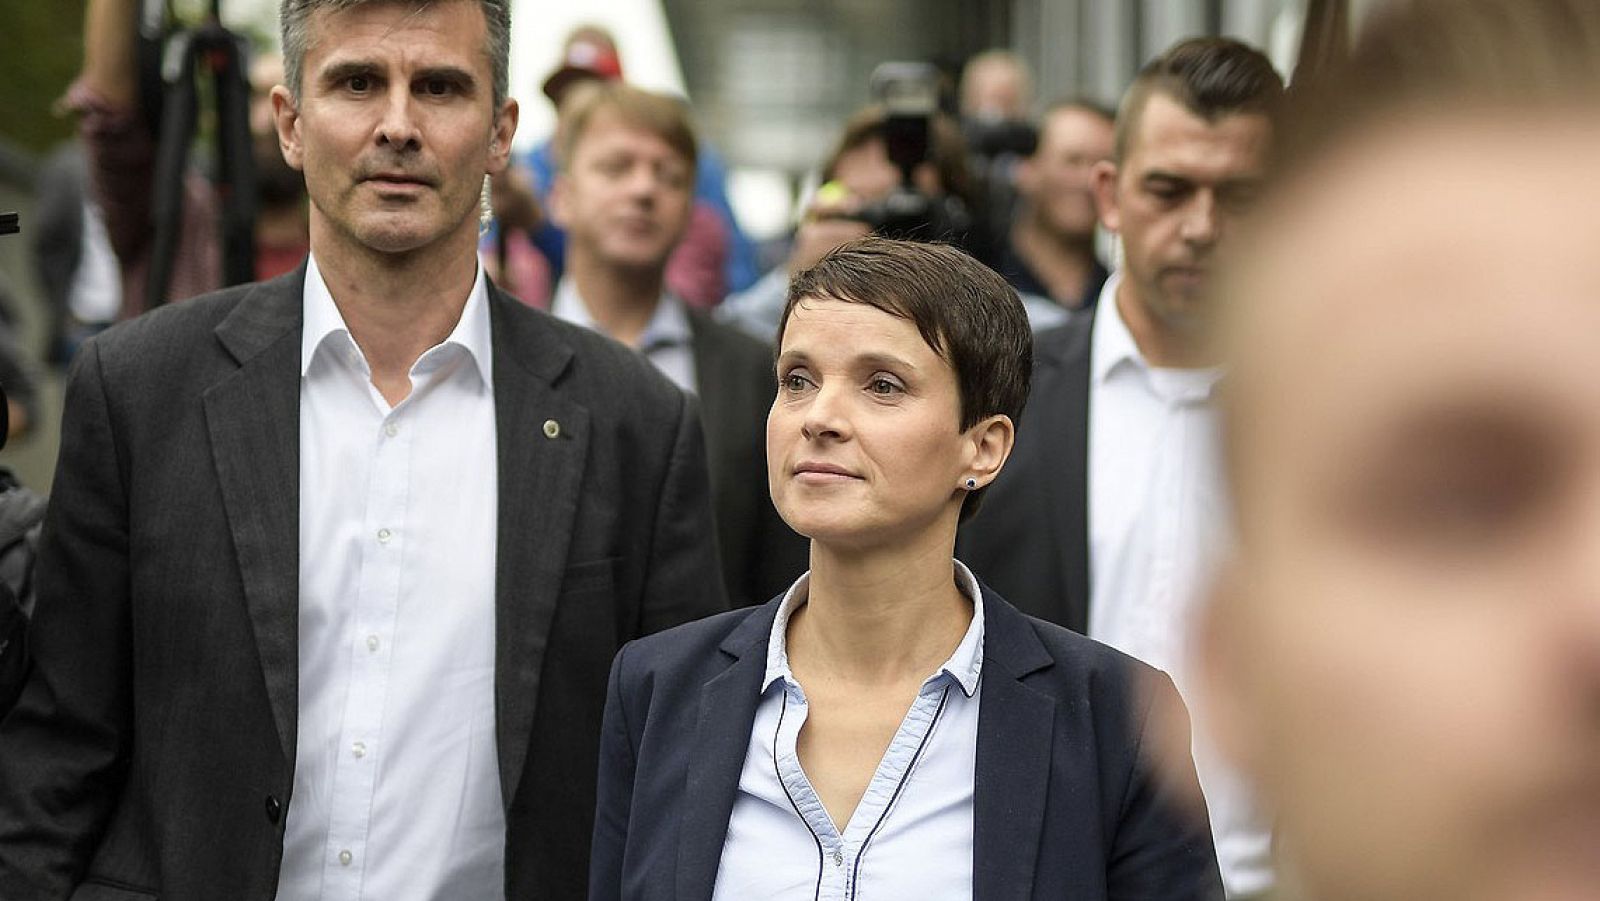 La copresidenta del partido ultraderechista Alternativa para Alemania (AfD) Frauke Petry